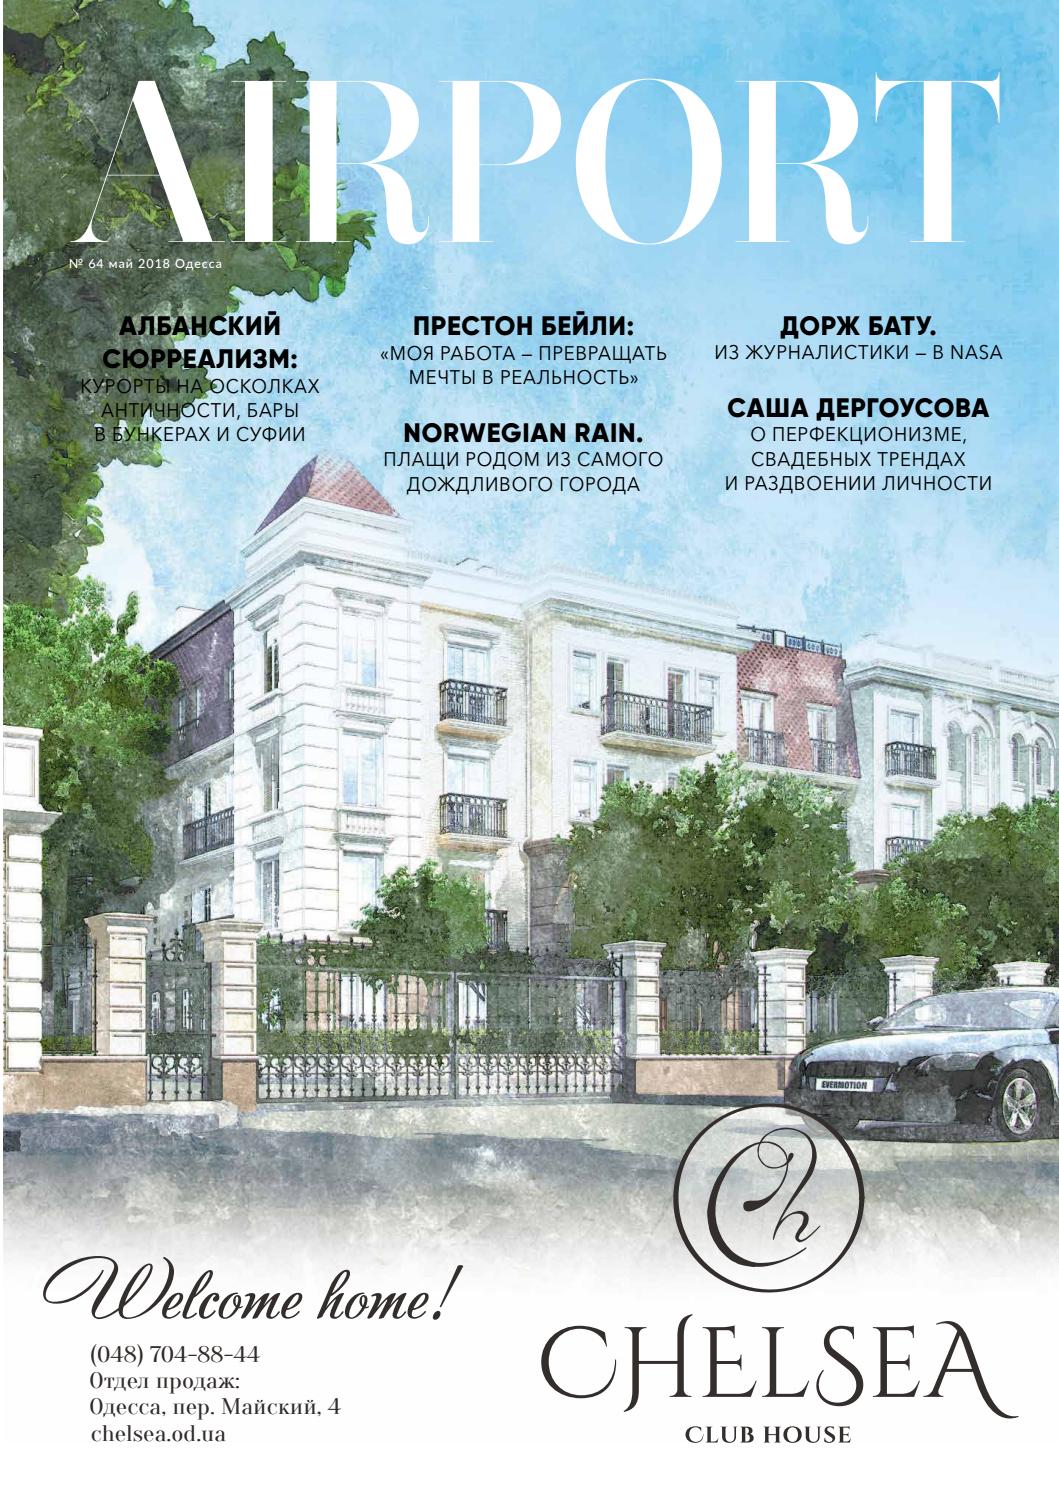 Promotion Salon De Jardin Frais May 18 by Airport Magazine Odessa issuu